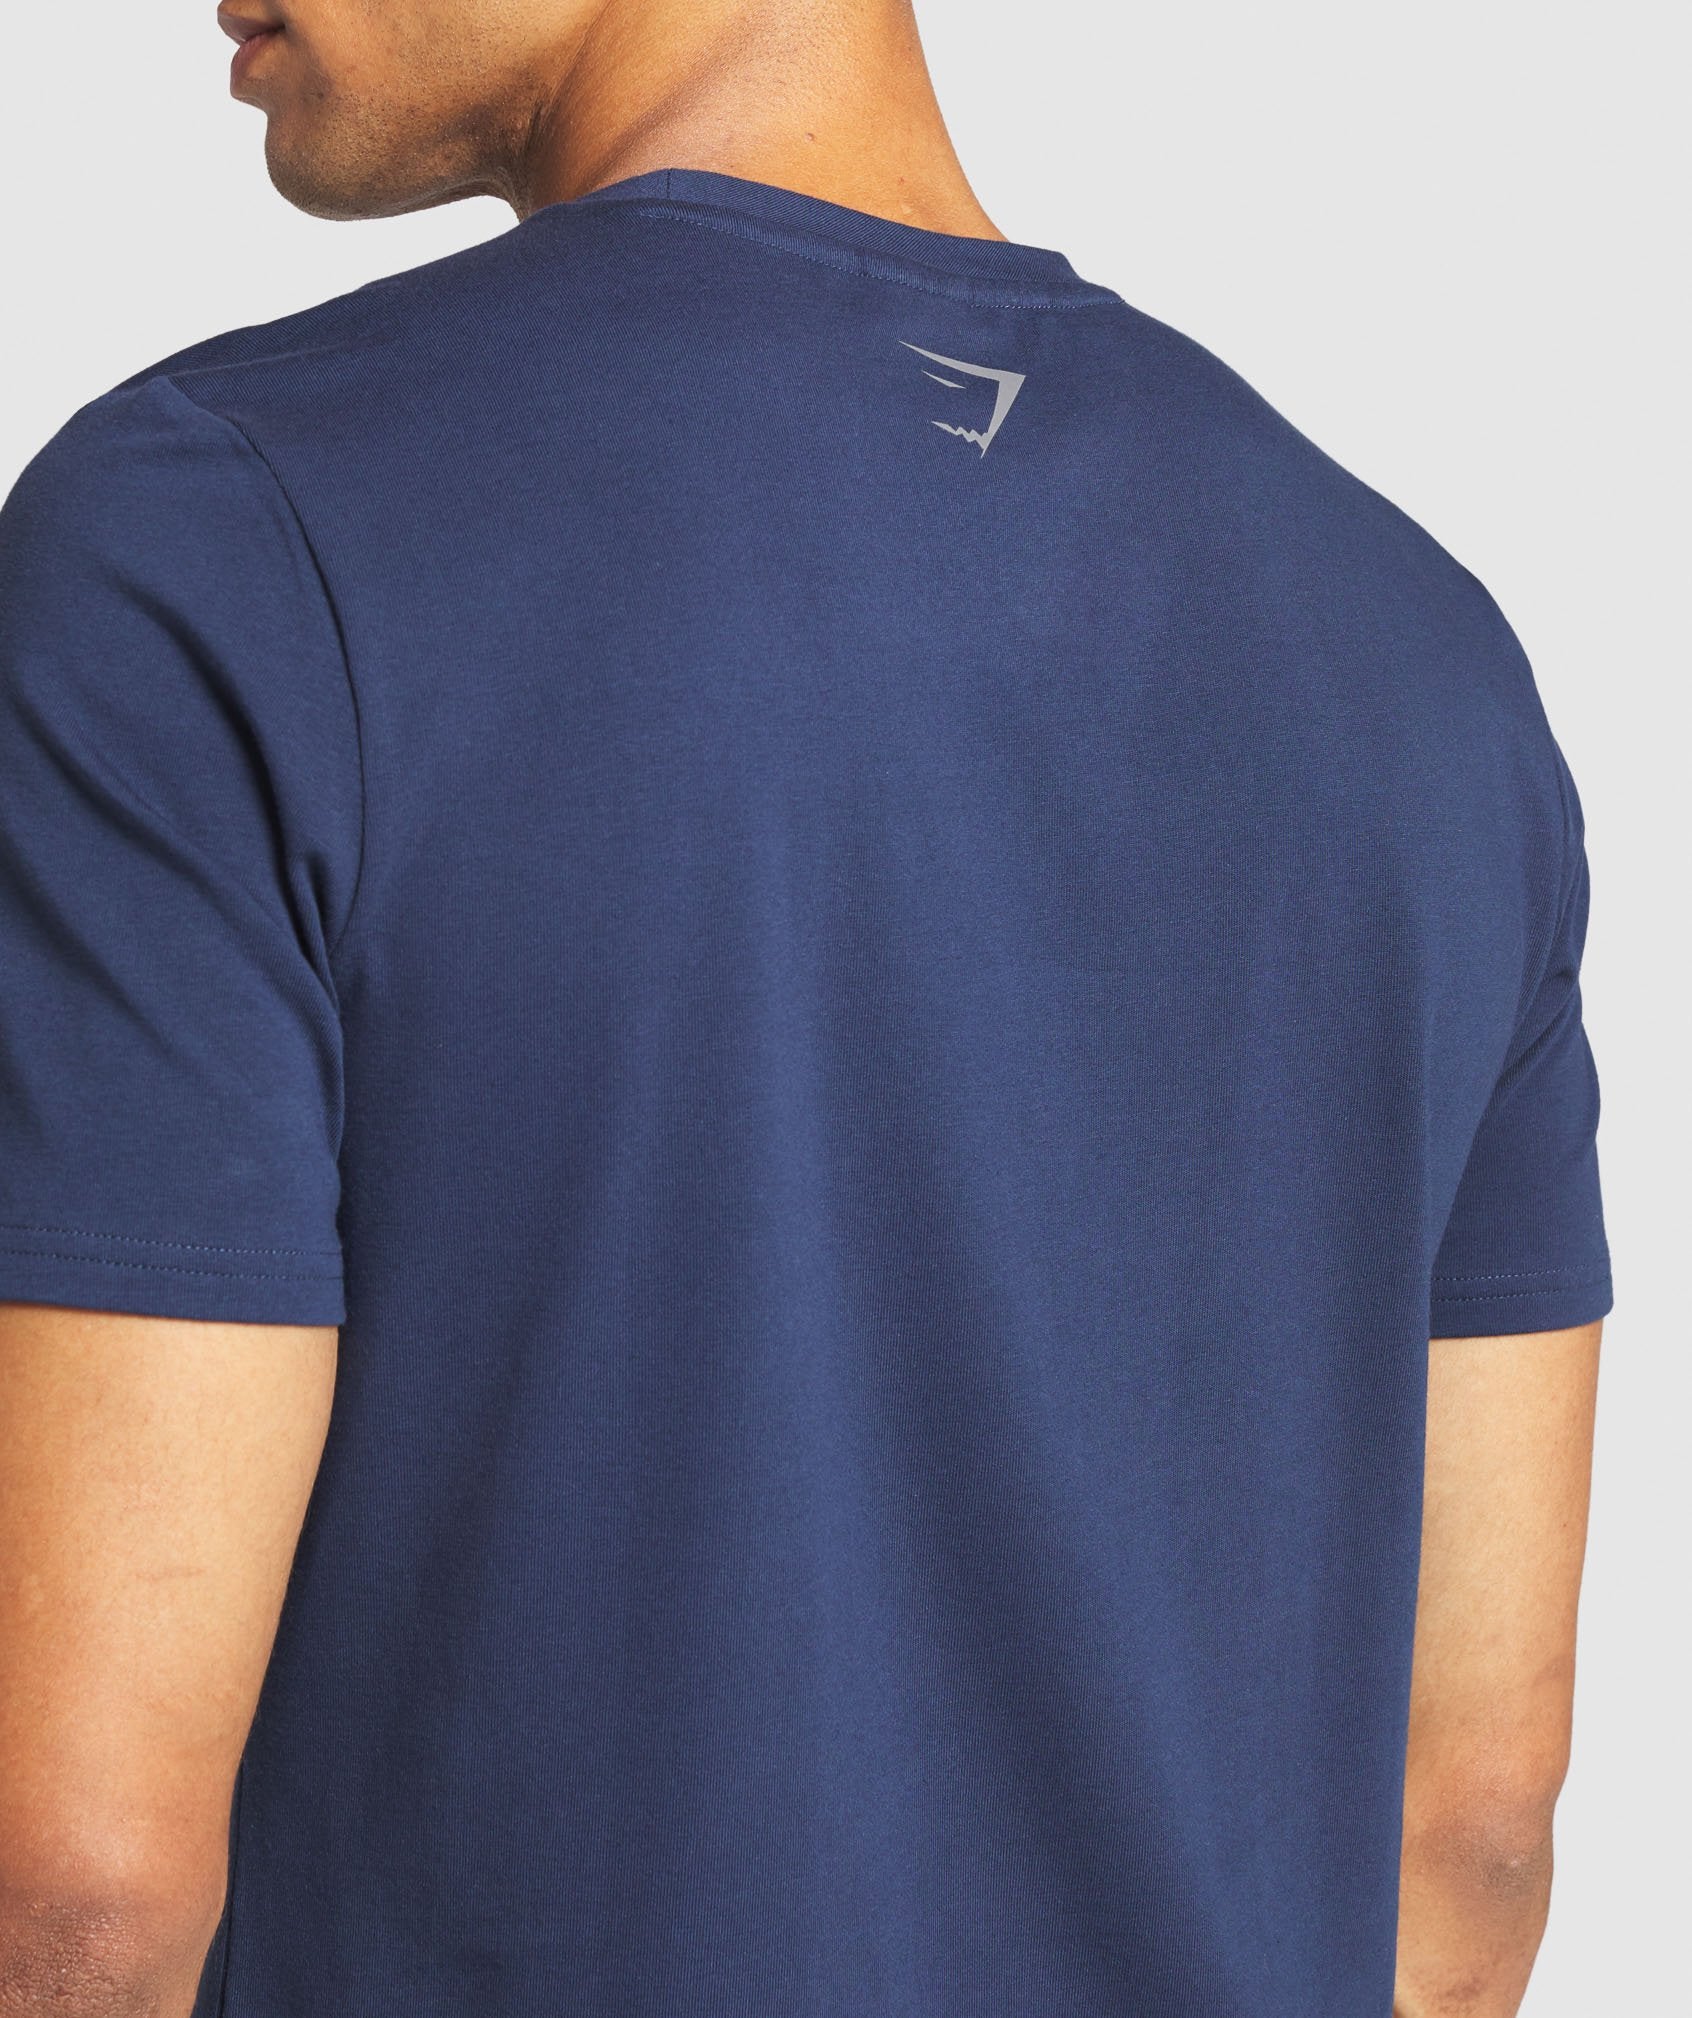 Graphic Pyramid T-Shirt in Dark Blue